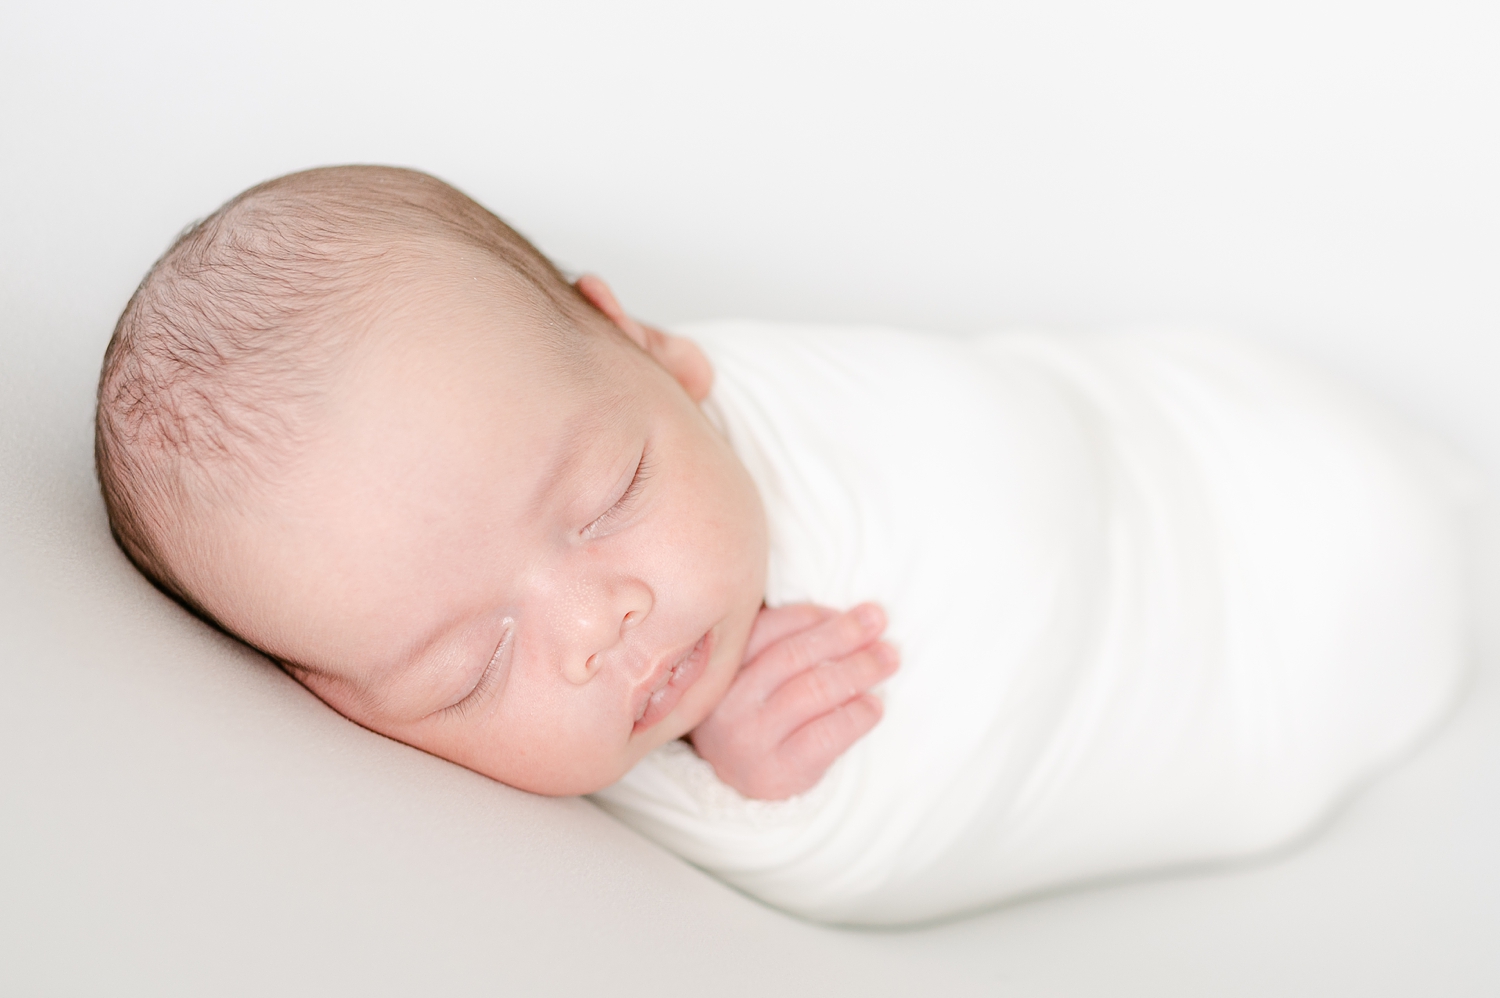 newborn baby boy wrapped in white blanket sleeping